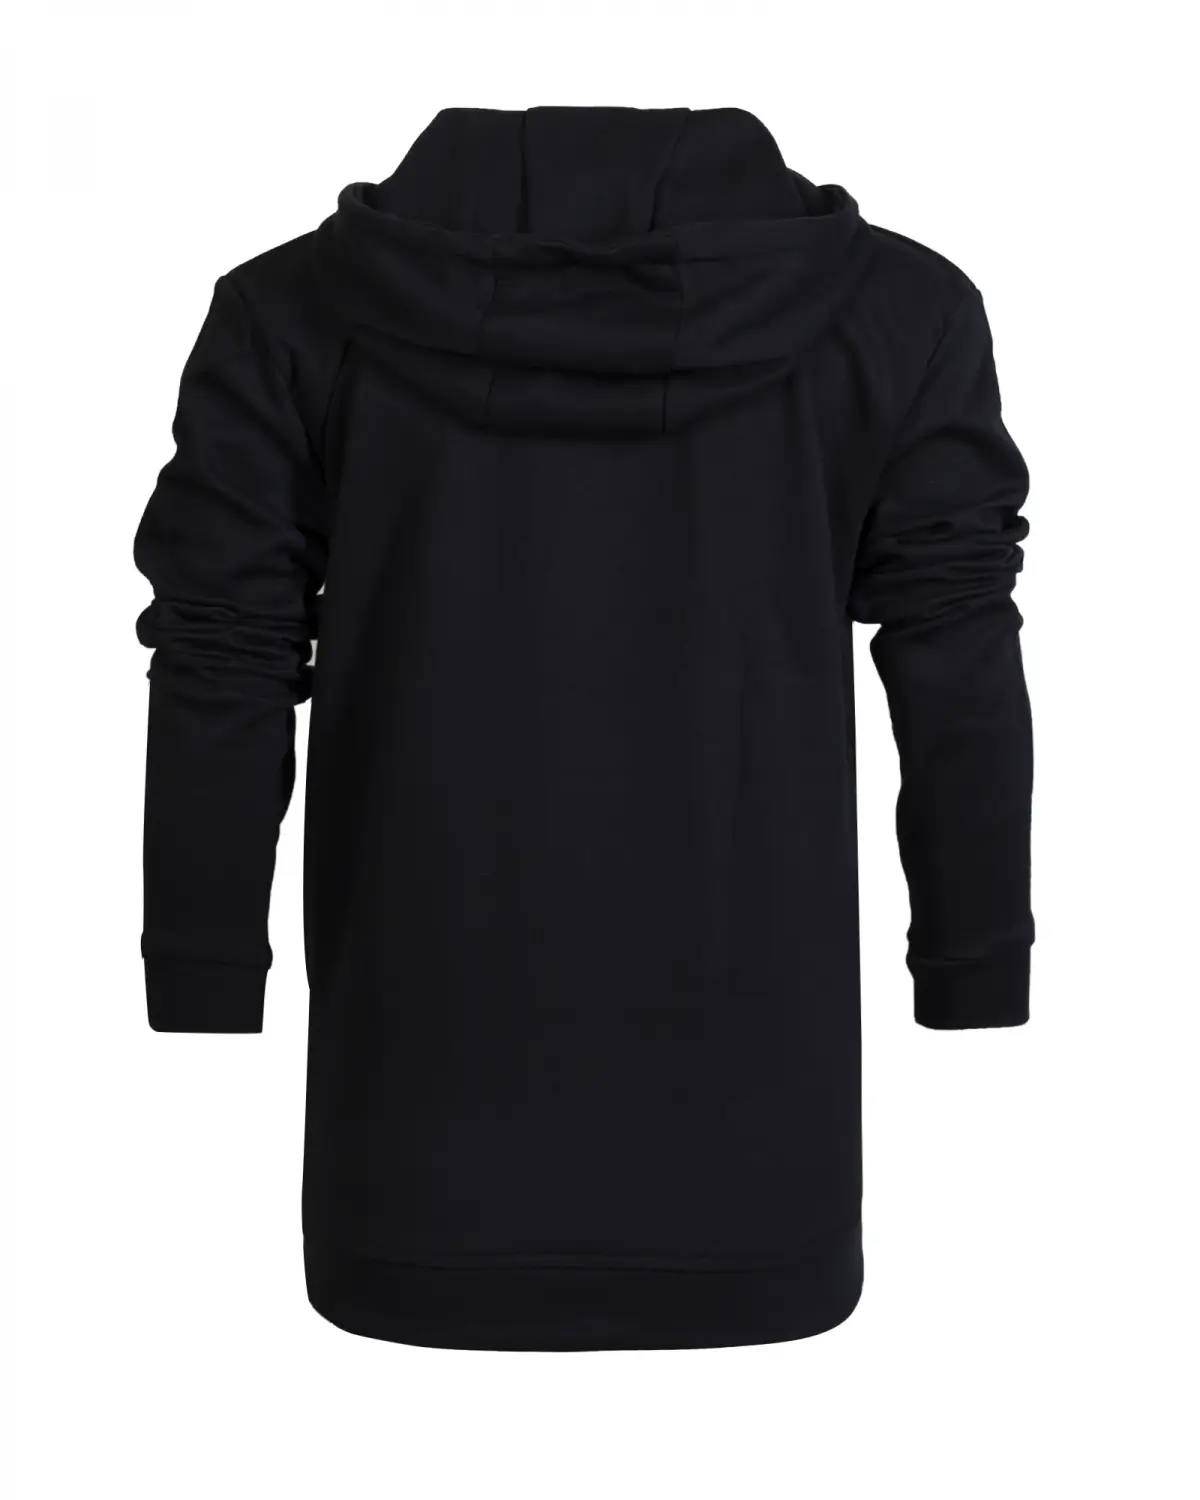 New Balance Lifestyle Siyah Kadın Sweatshirt - WPH3128-BK